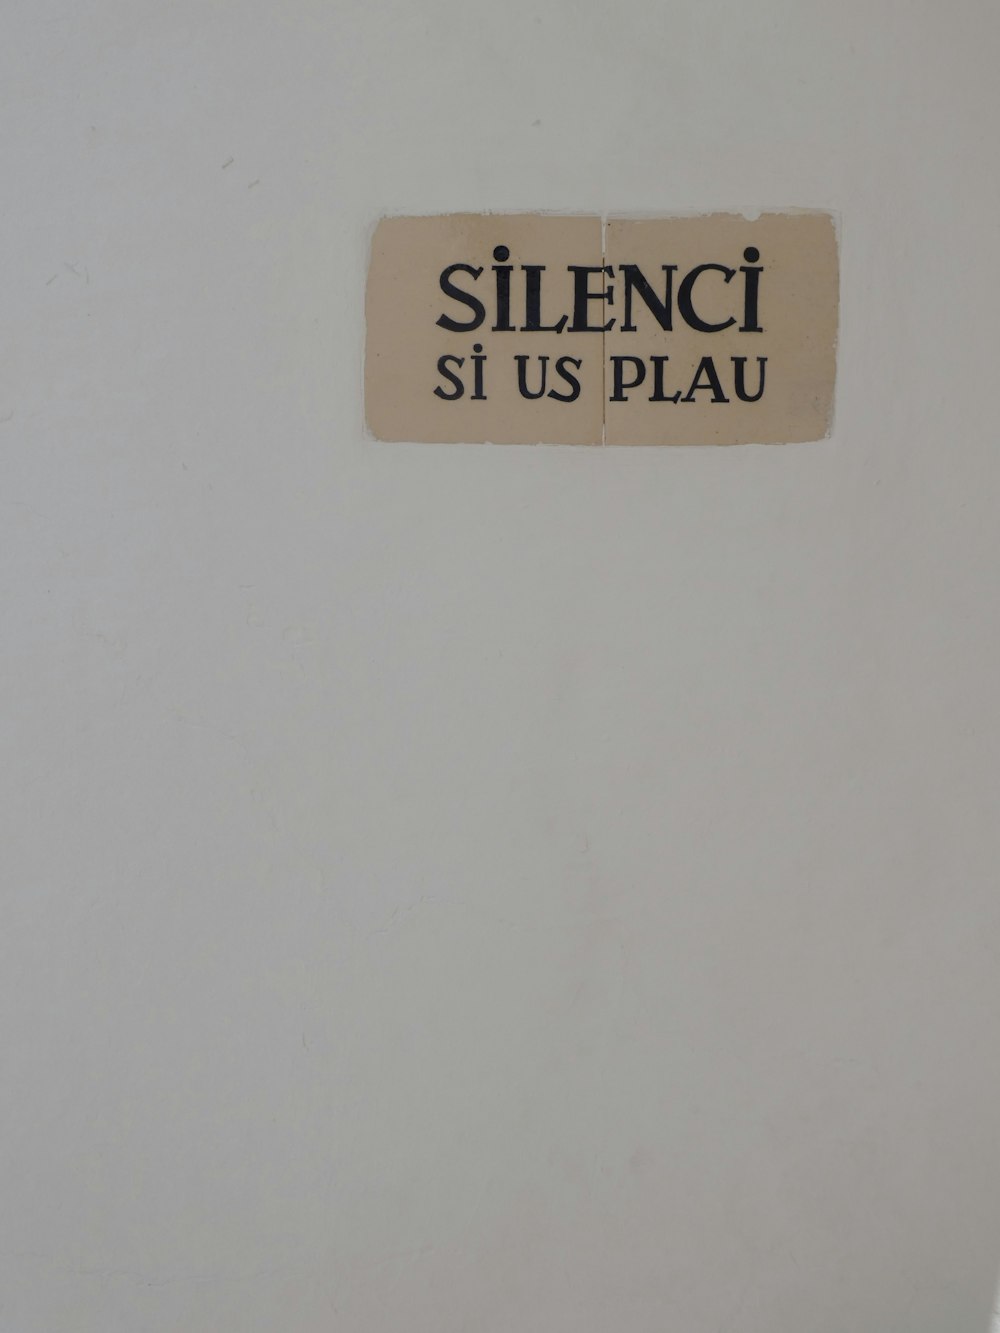 silenci si us plau signage